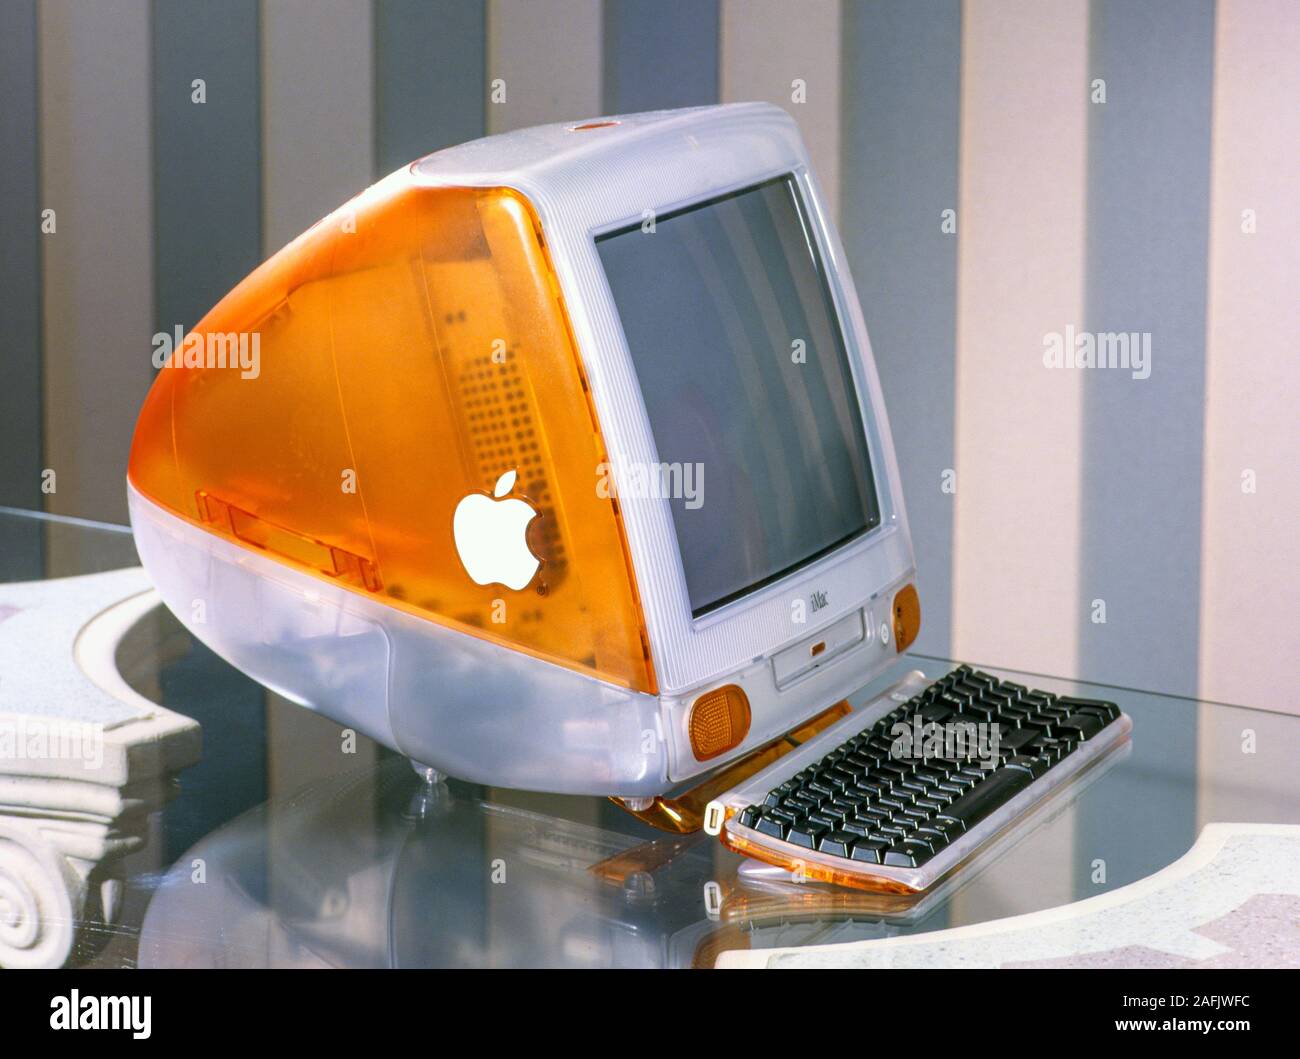 Computer Mac imac G3 Tangerine 1998 Foto stock - Alamy